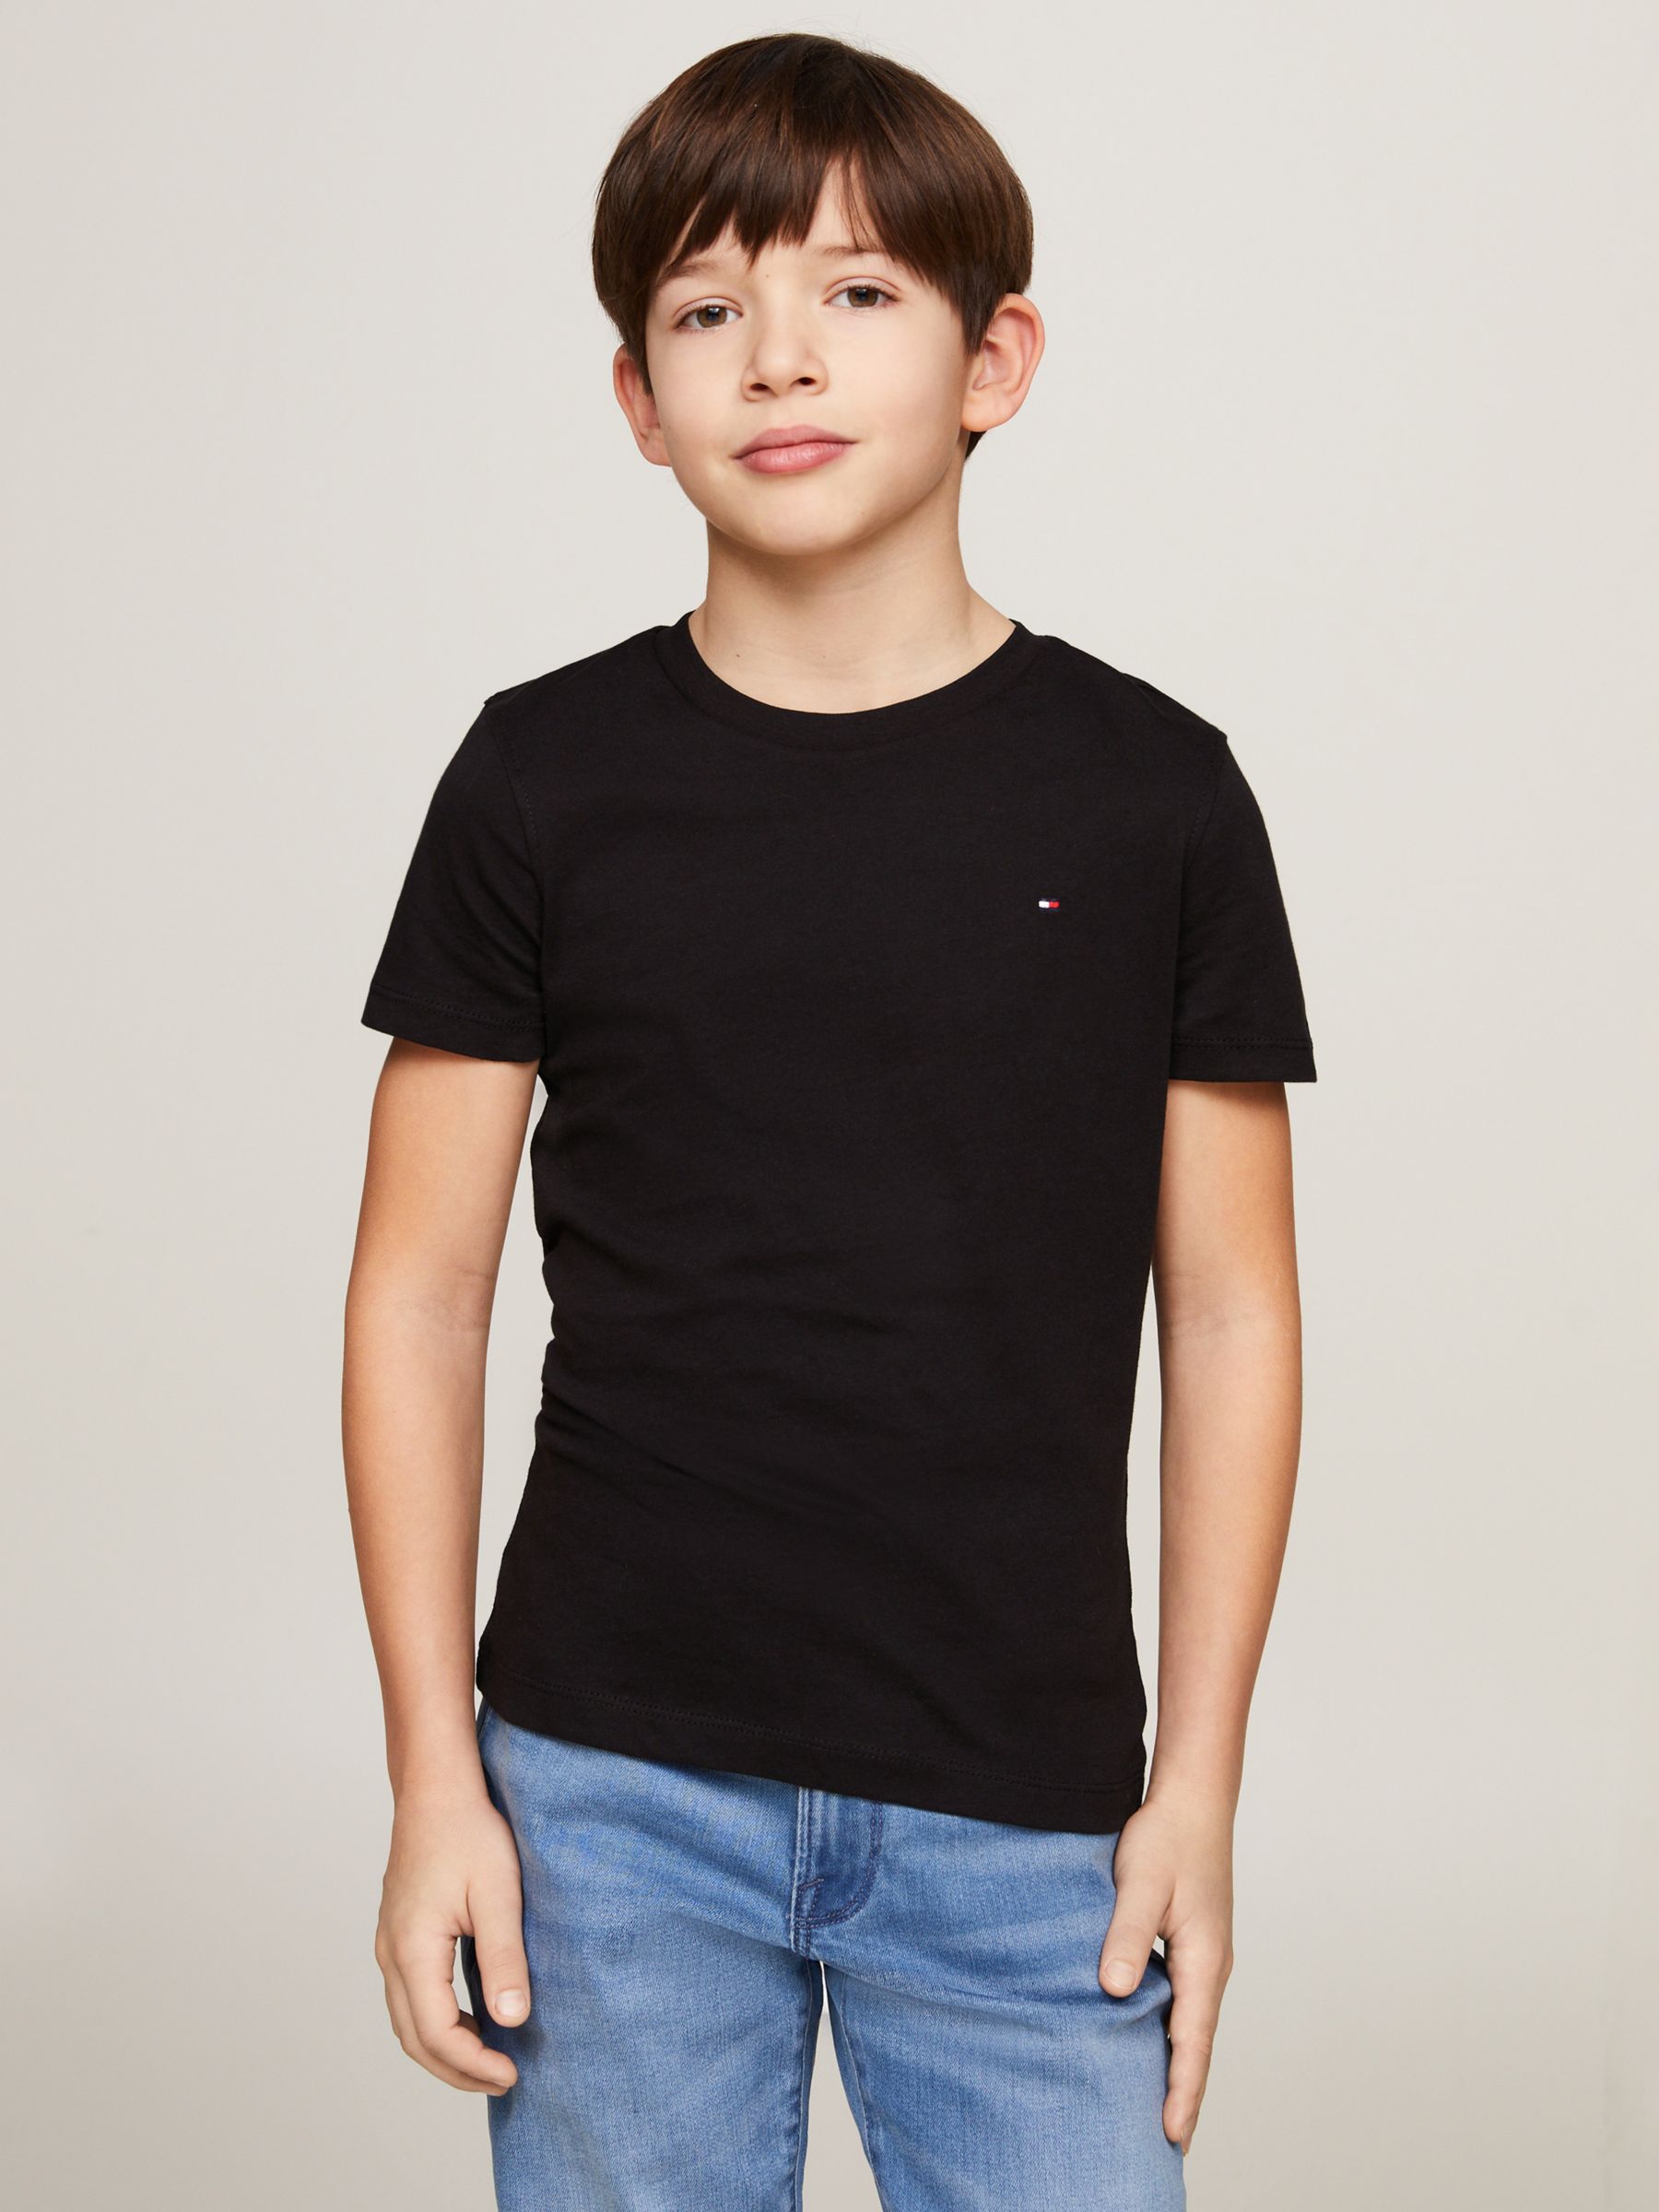 Tommy Hilfiger Kids' Basic Crew Neck Short Sleeve Top, Black, 3 years